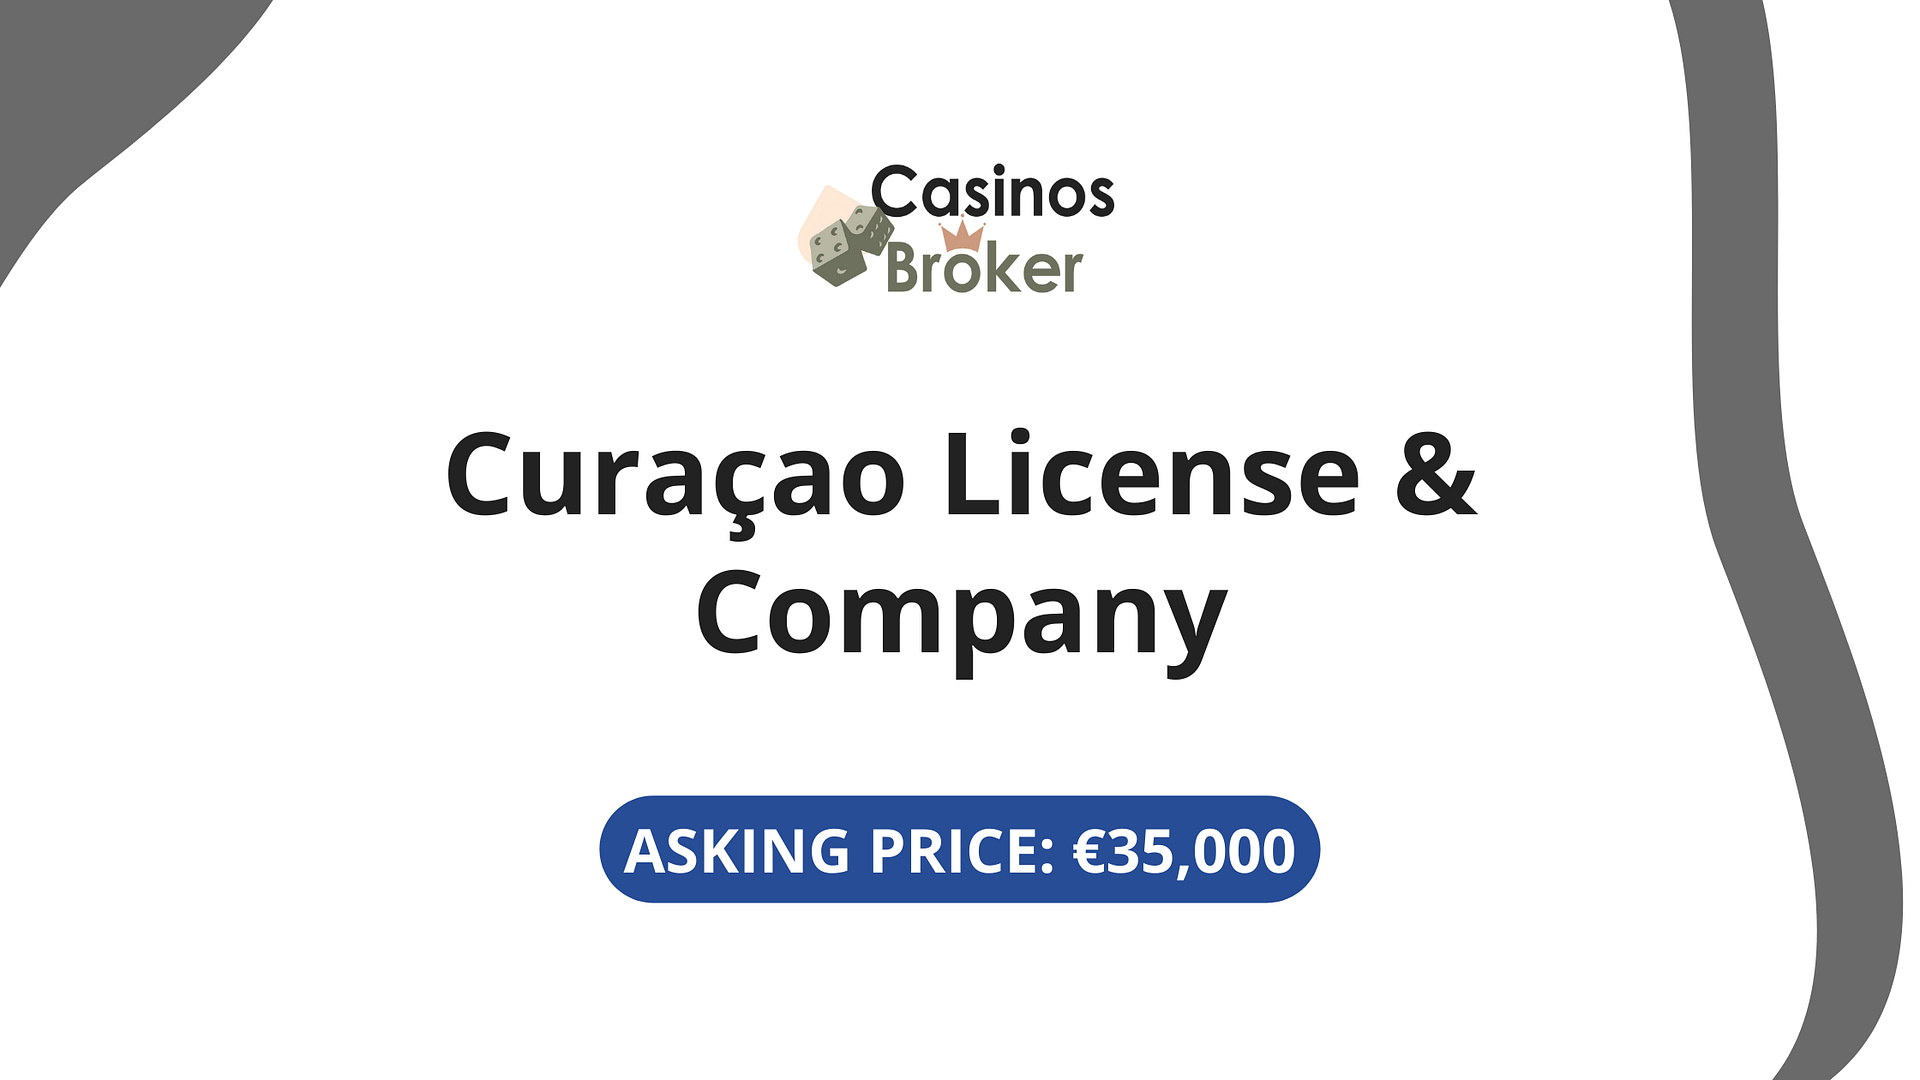 Curaçao License & Company - Asking Price €35,000